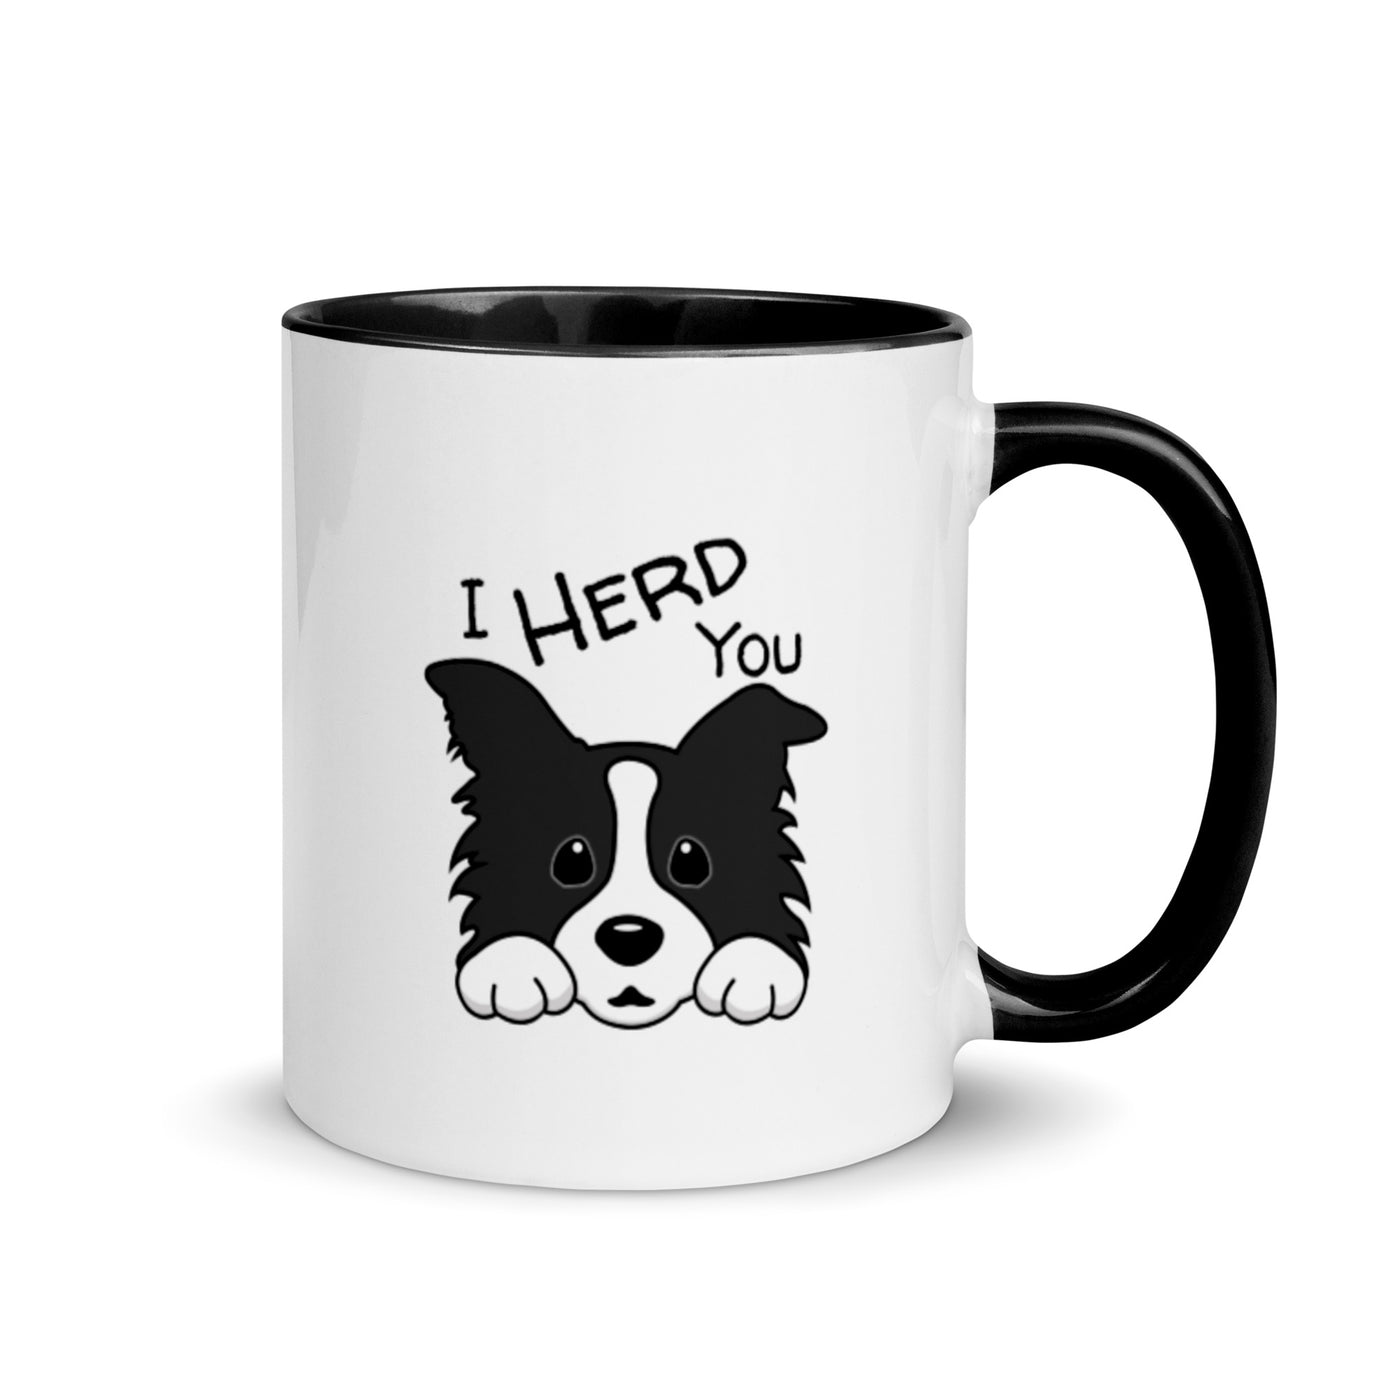 I cant keep calm I have a border collie mug | Border collie mug | I herd you border collie